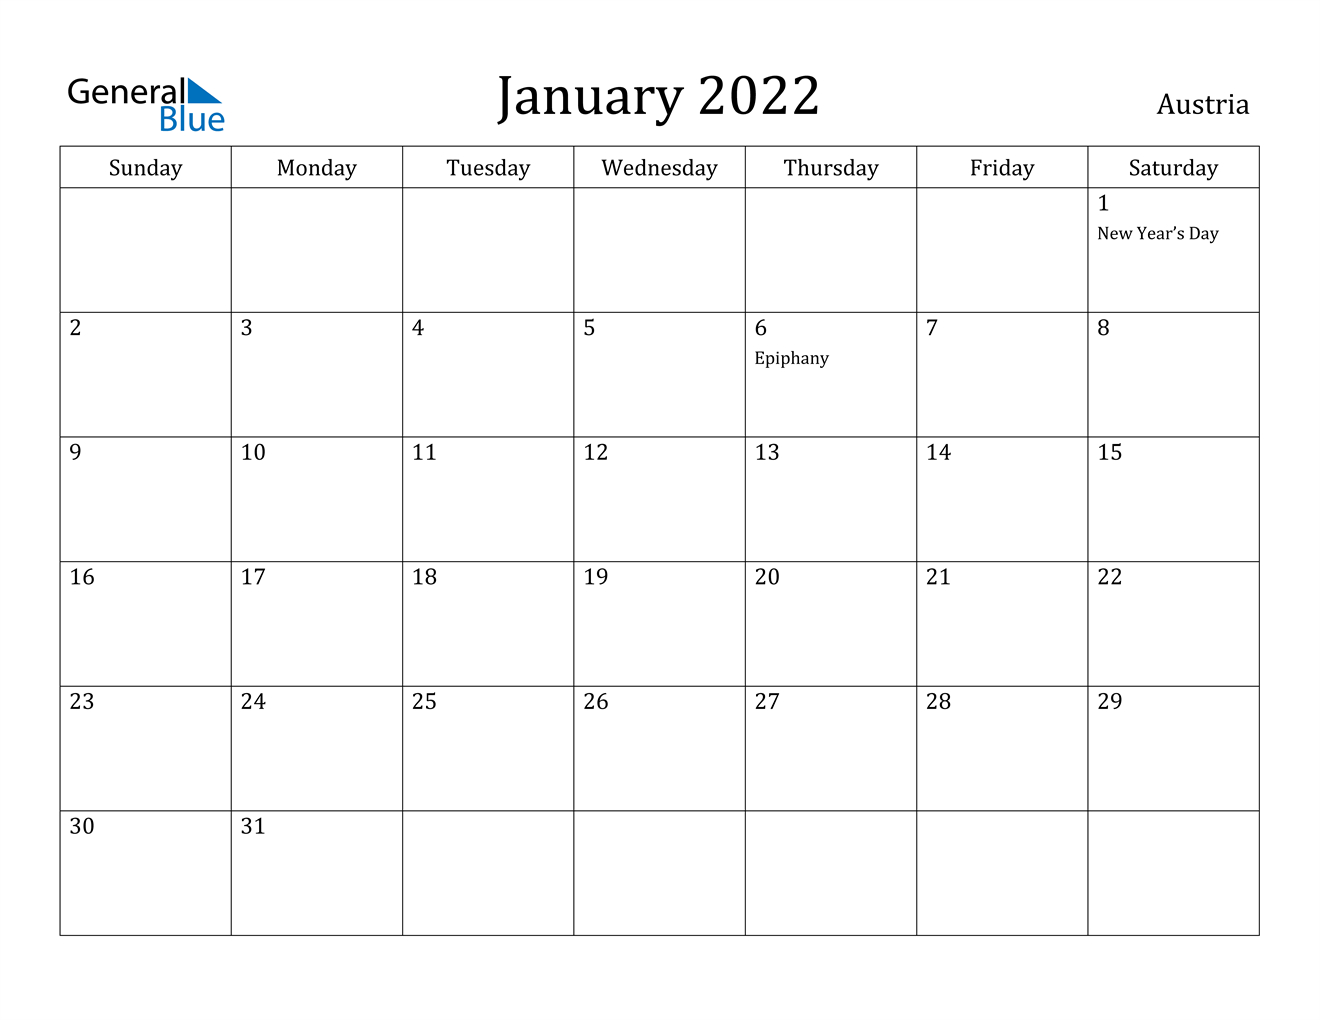 January 2022 Calendar - Austria